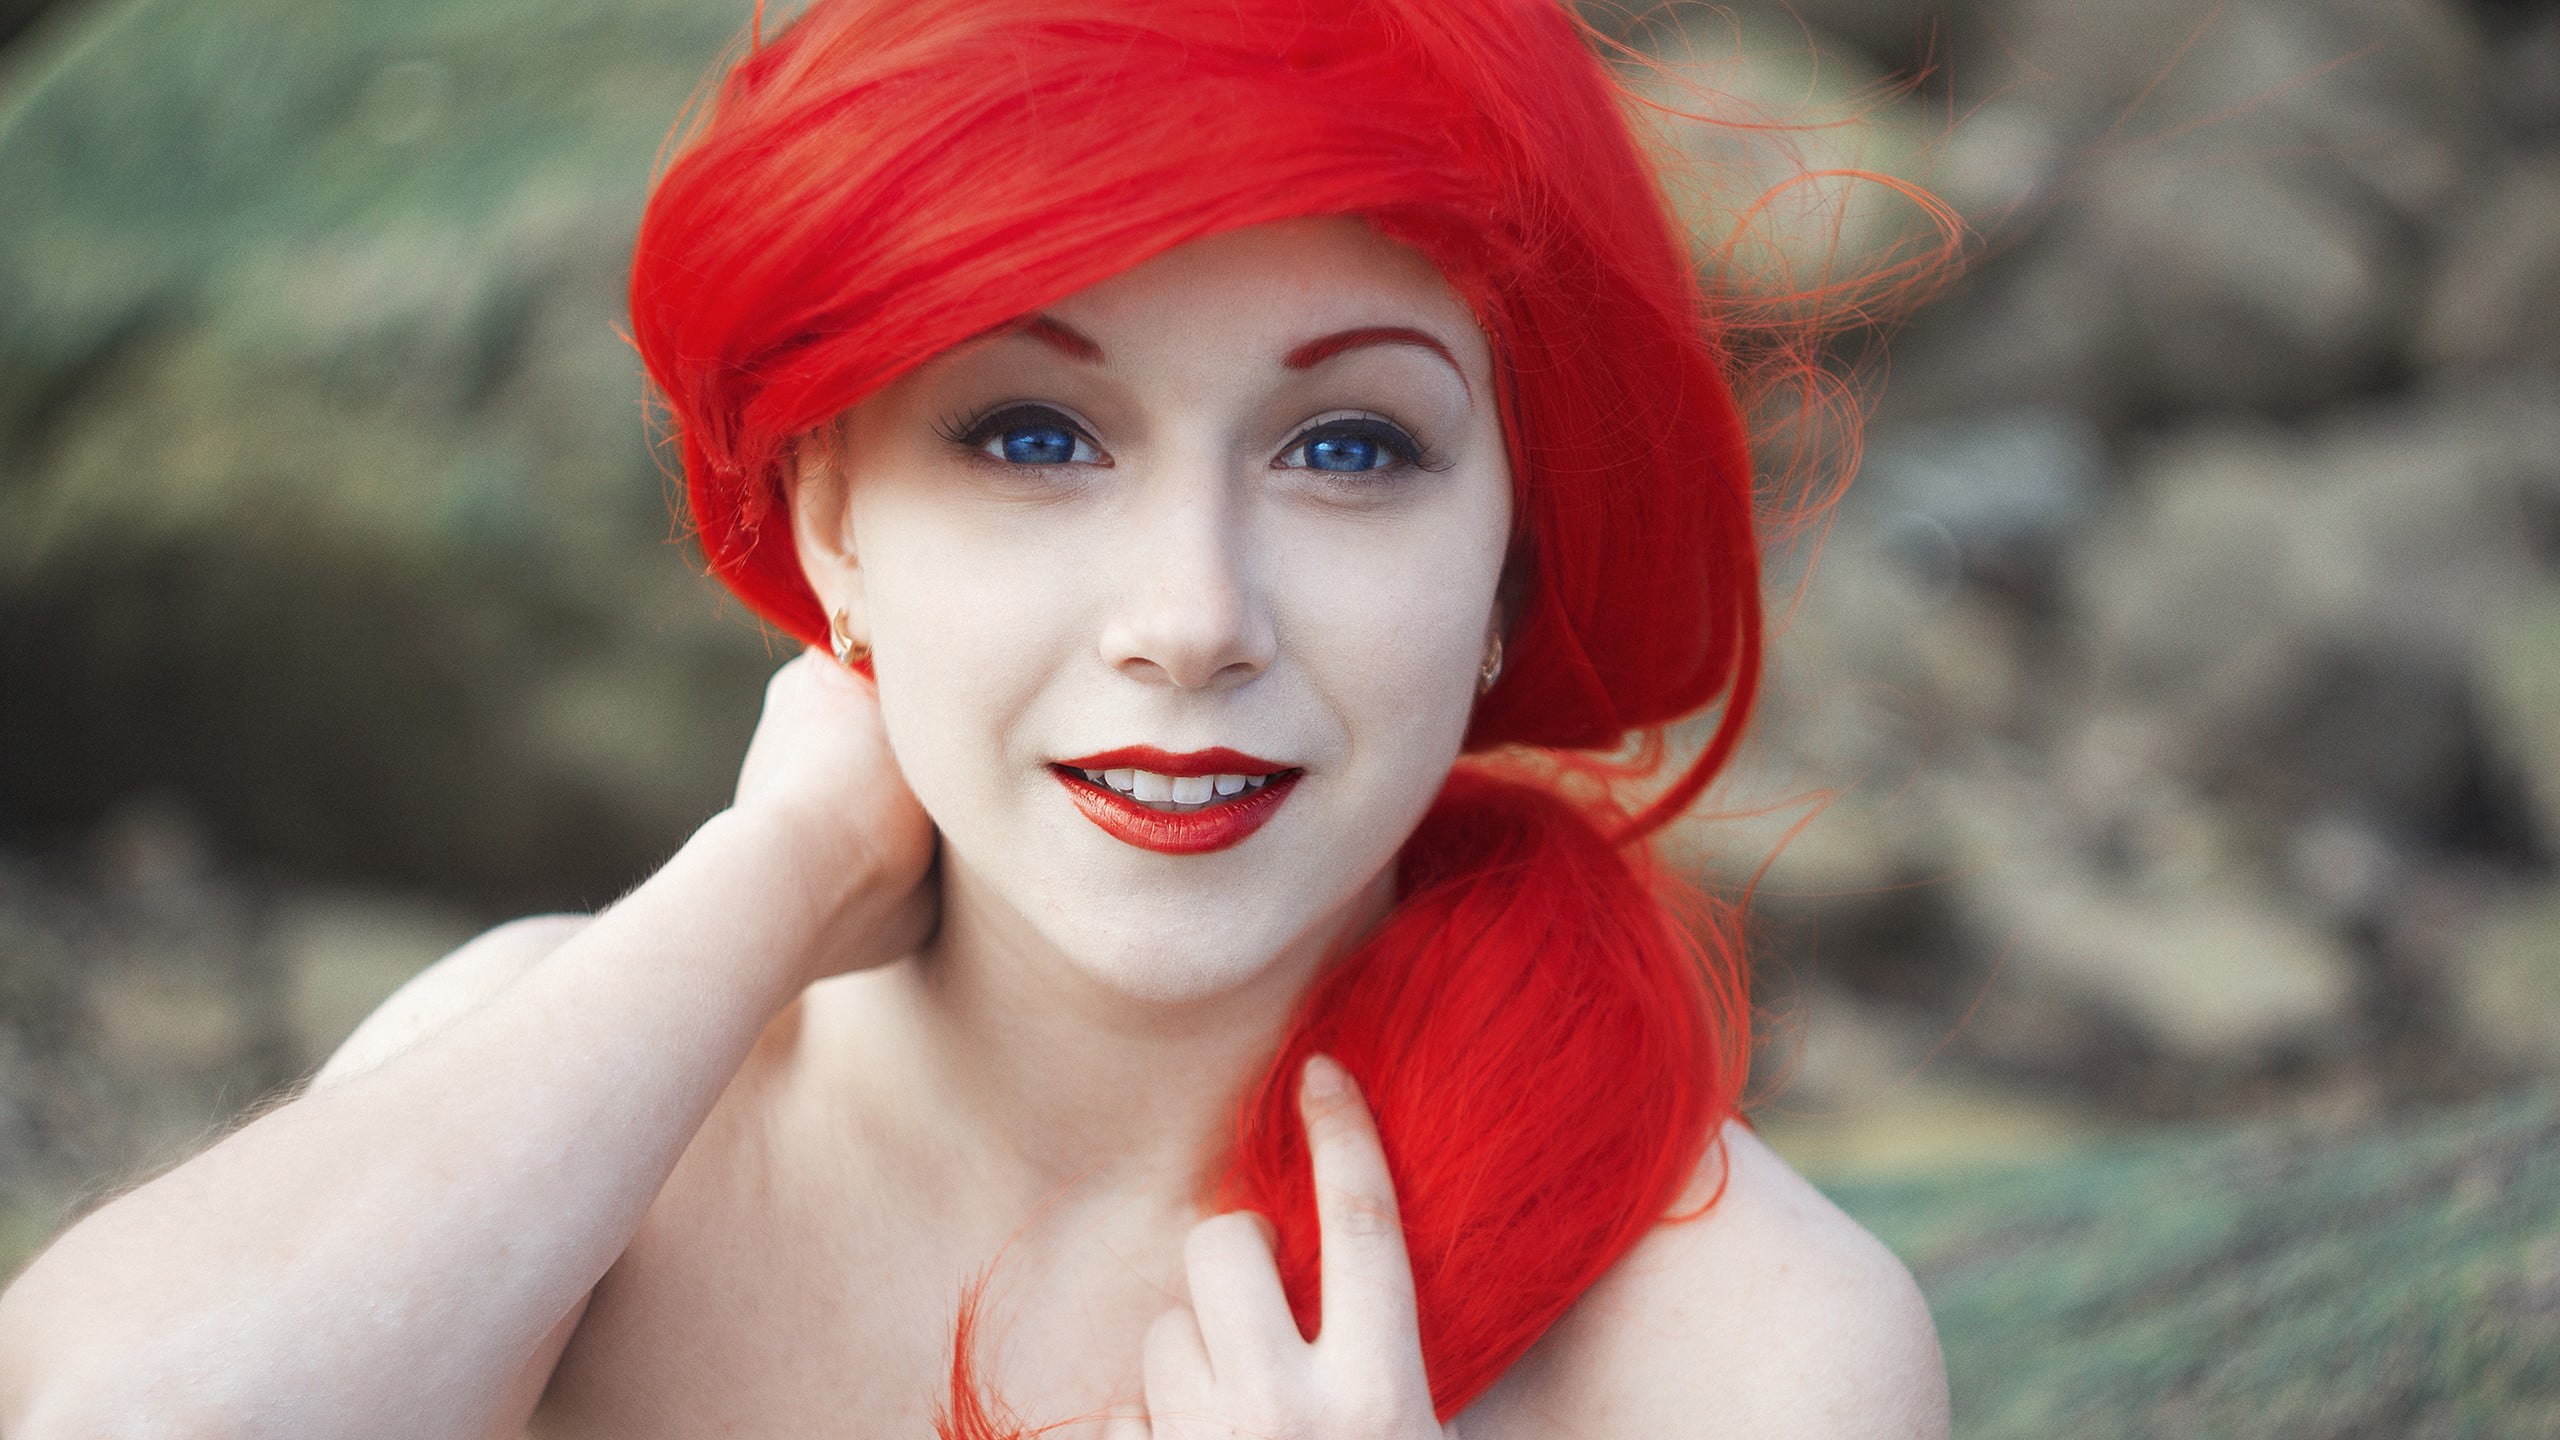 Bright Red Hair Blue Eyes Girl - 2560x1440 Wallpaper - teahub.io